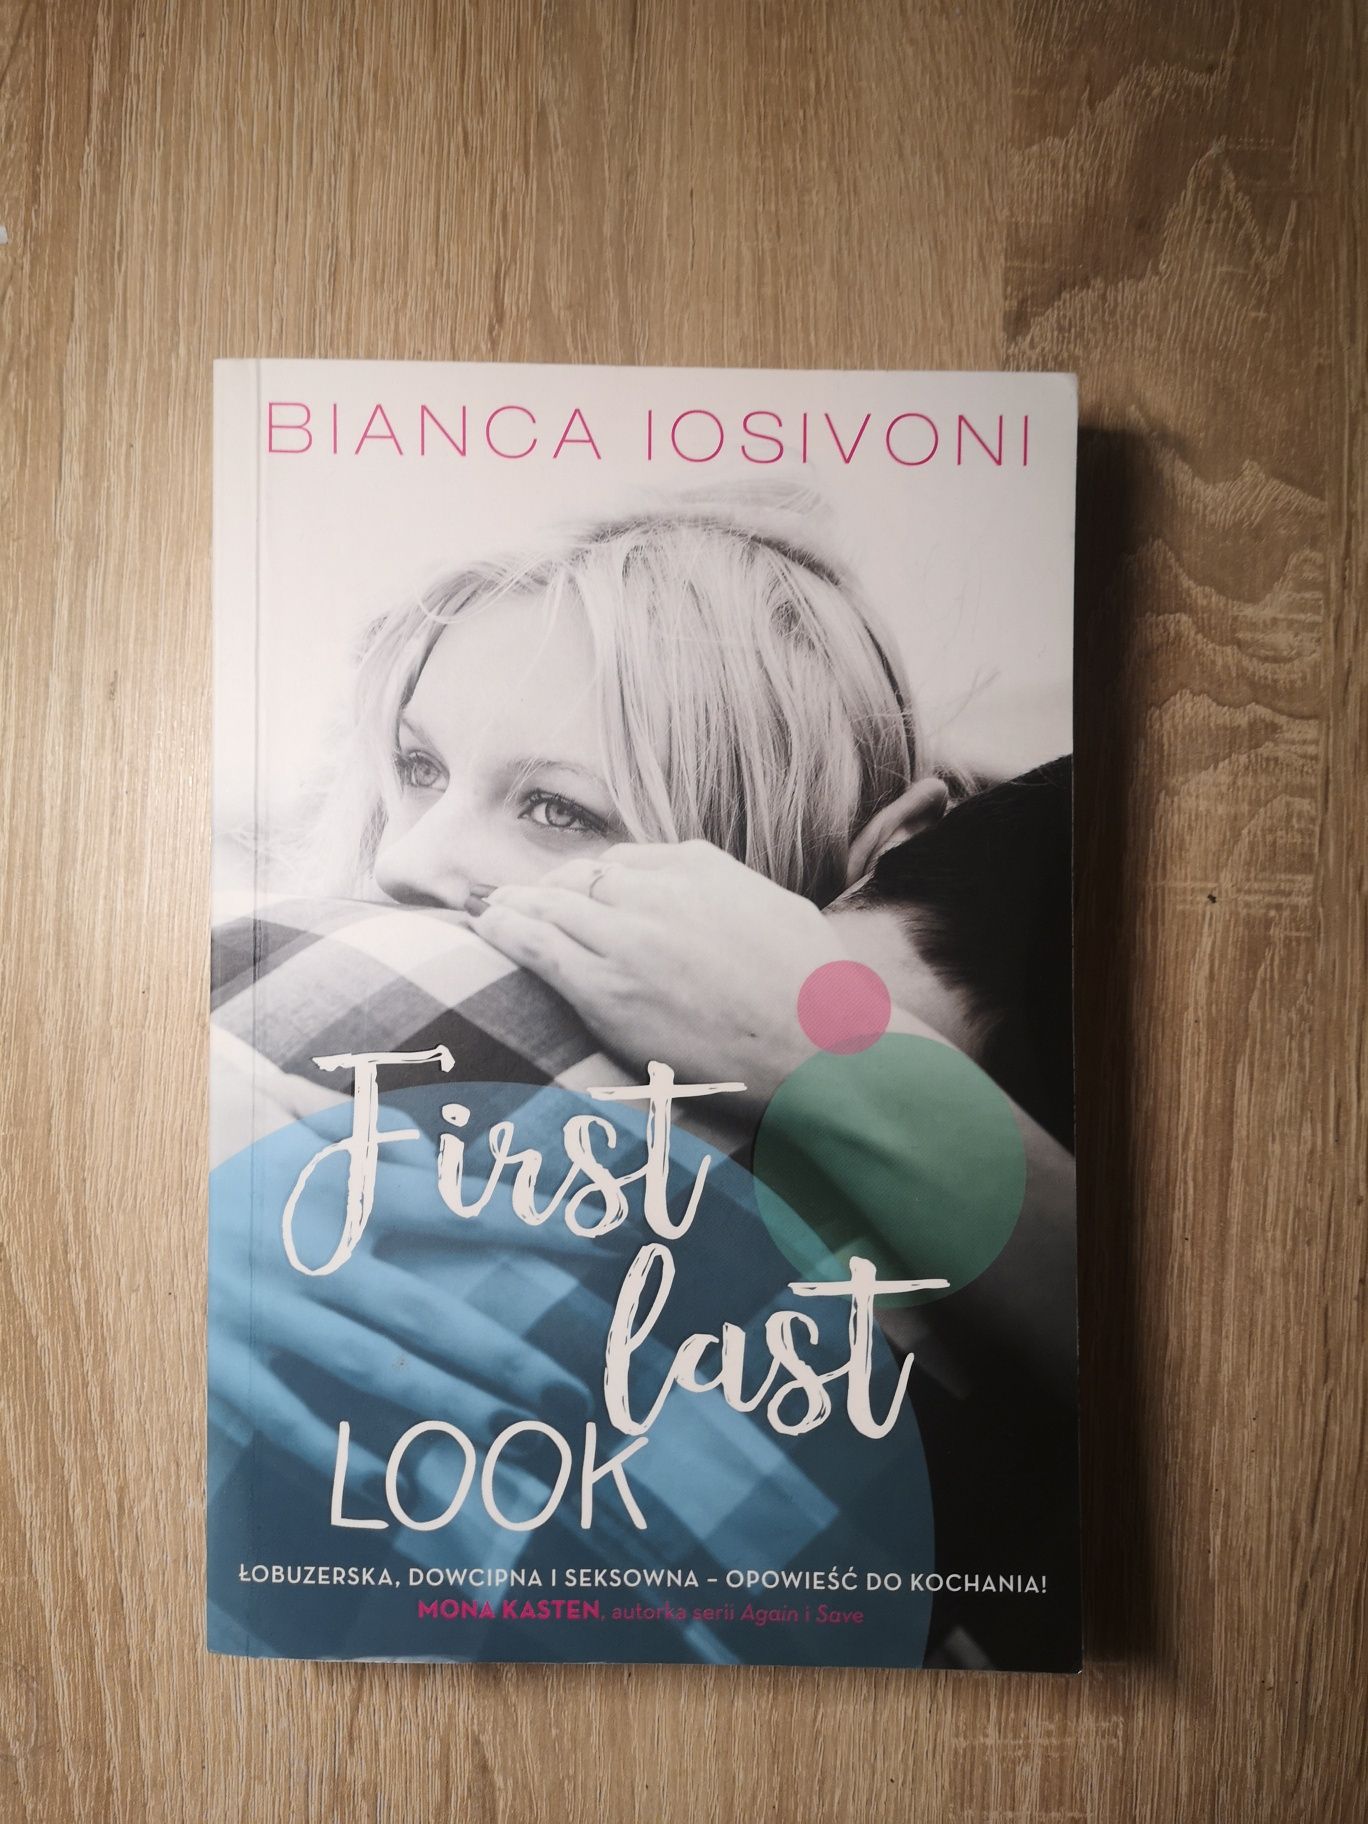 First last look - Bianca Iosivoni